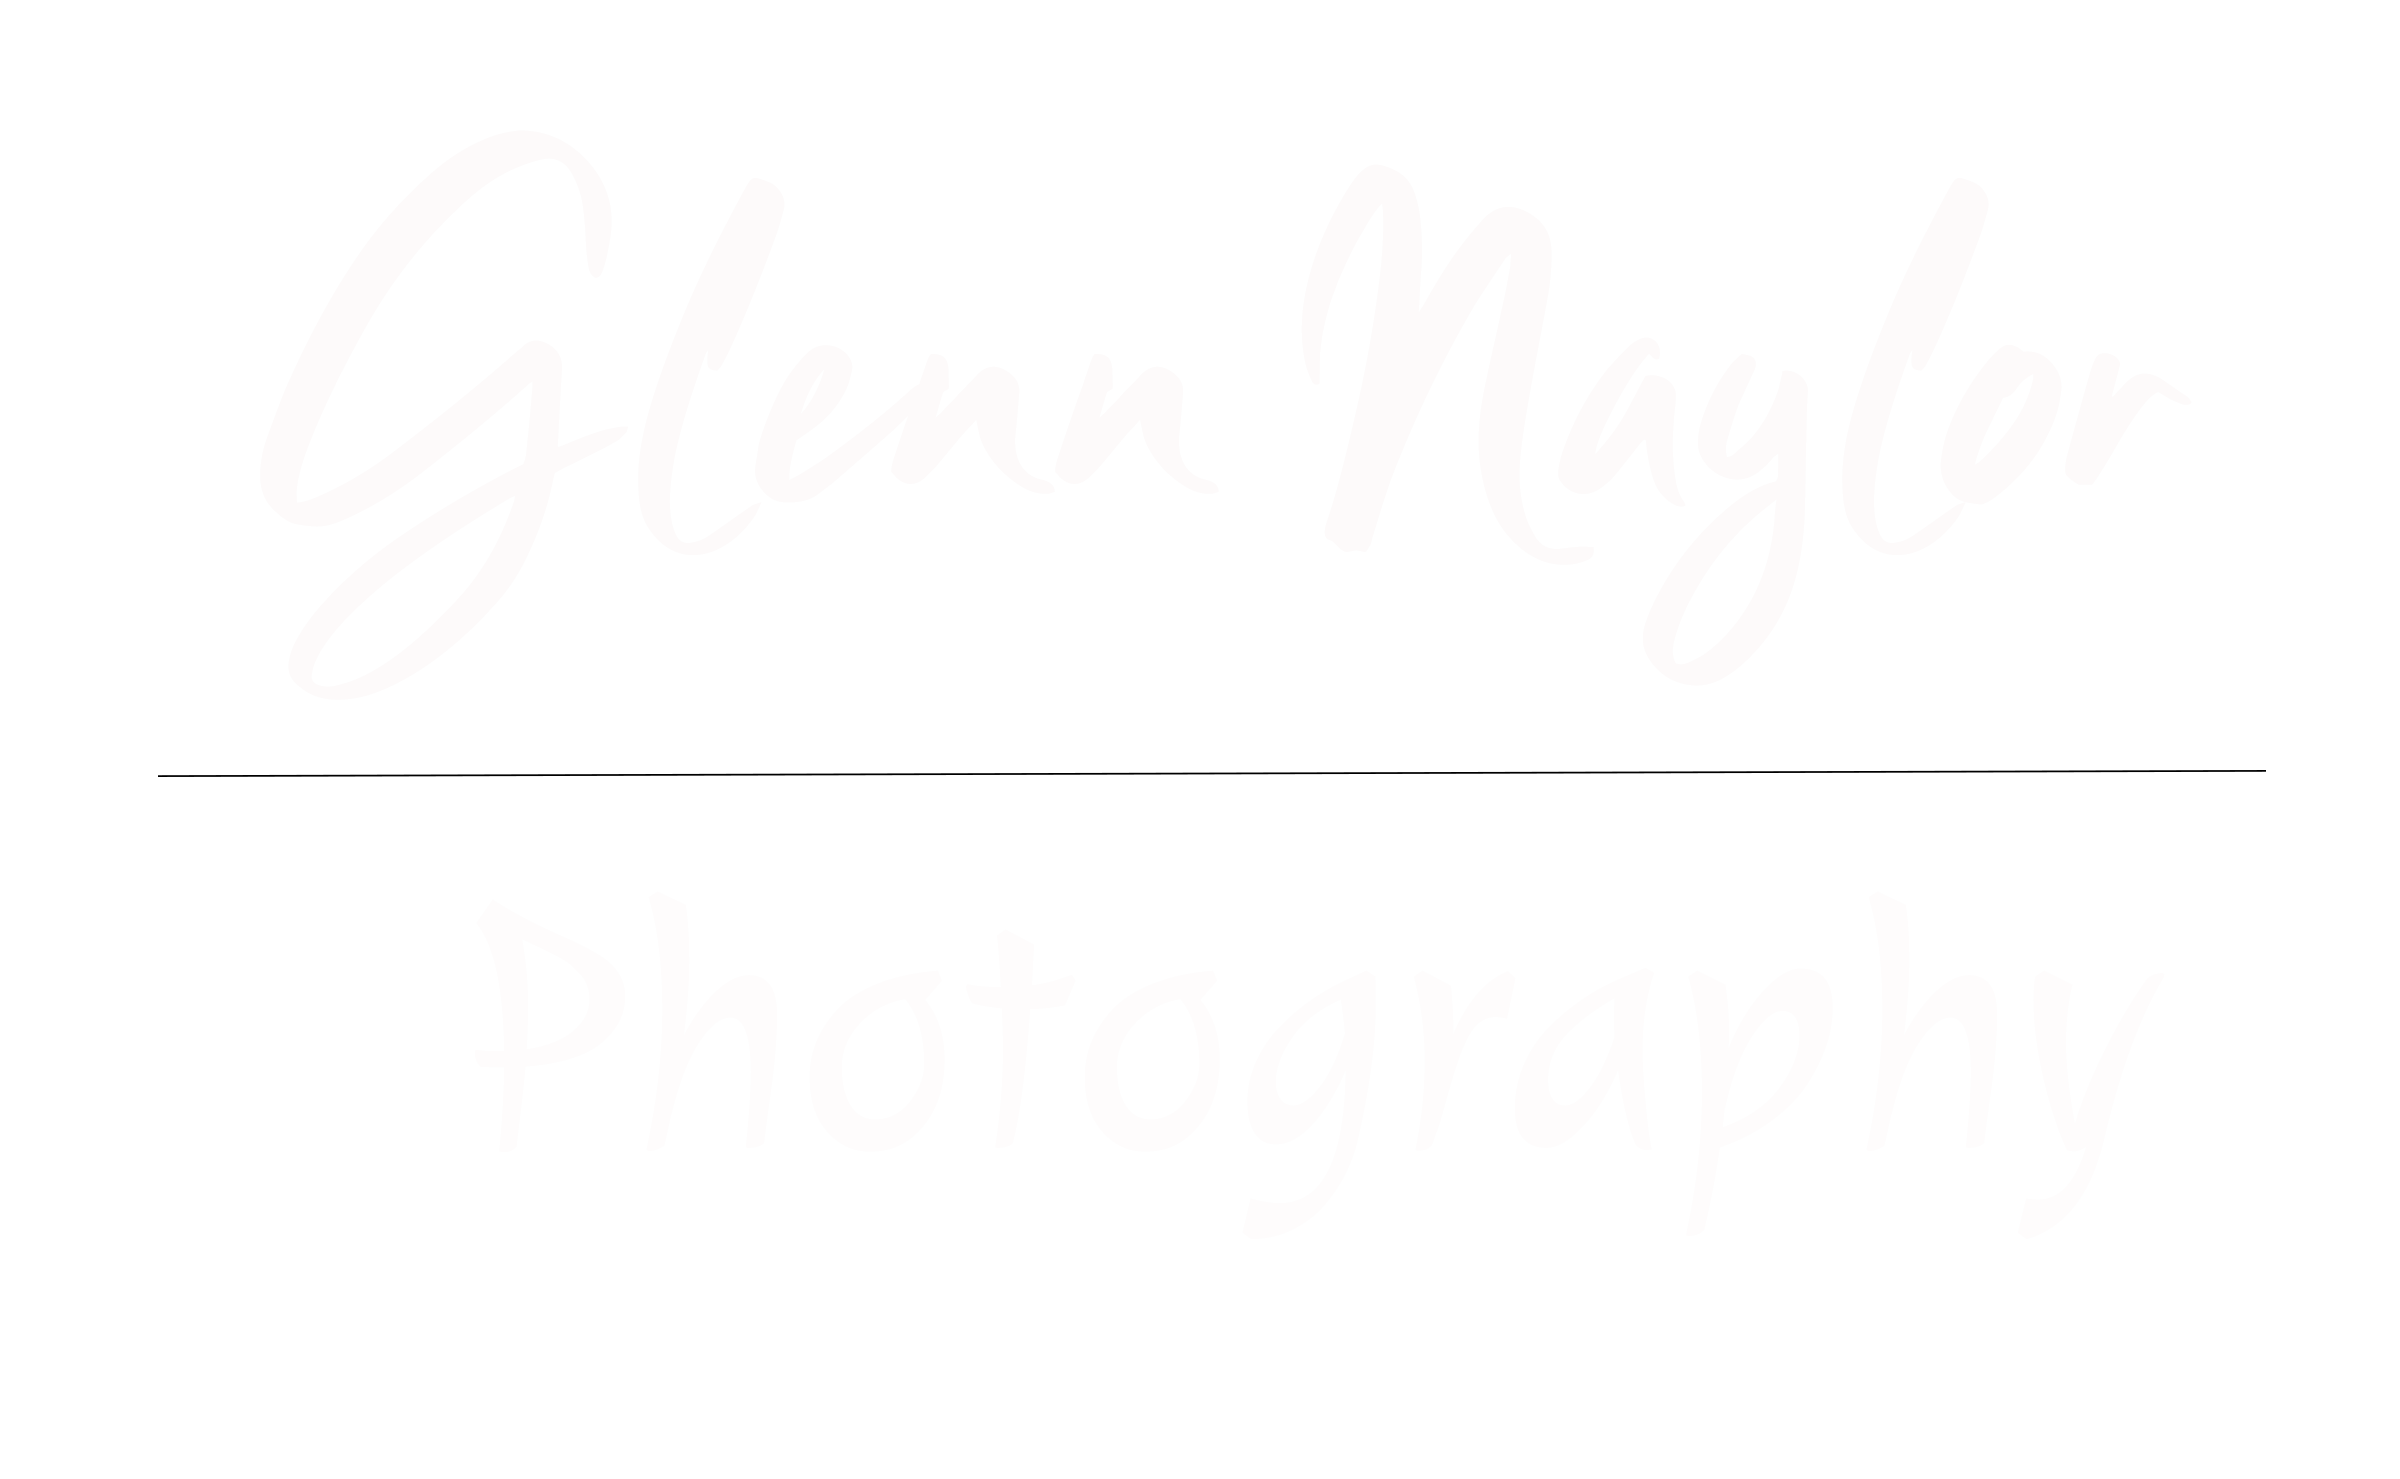 Glenn Naylor Photography